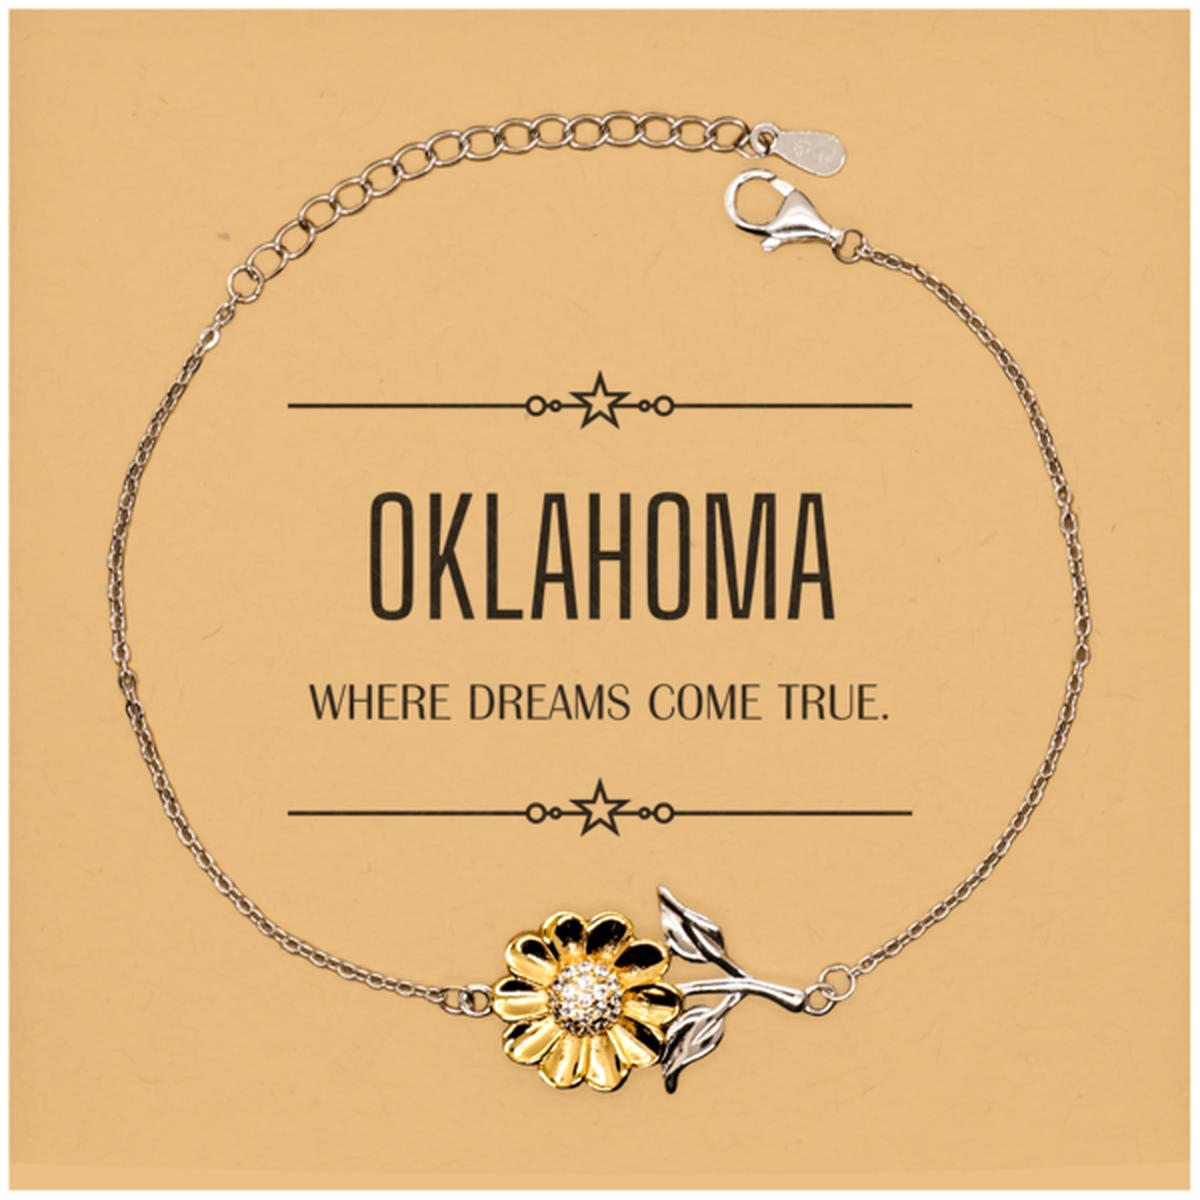 Love Oklahoma State Sunflower Bracelet, Oklahoma Where dreams come true, Birthday Christmas Inspirational Gifts For Oklahoma Men, Women, Friends